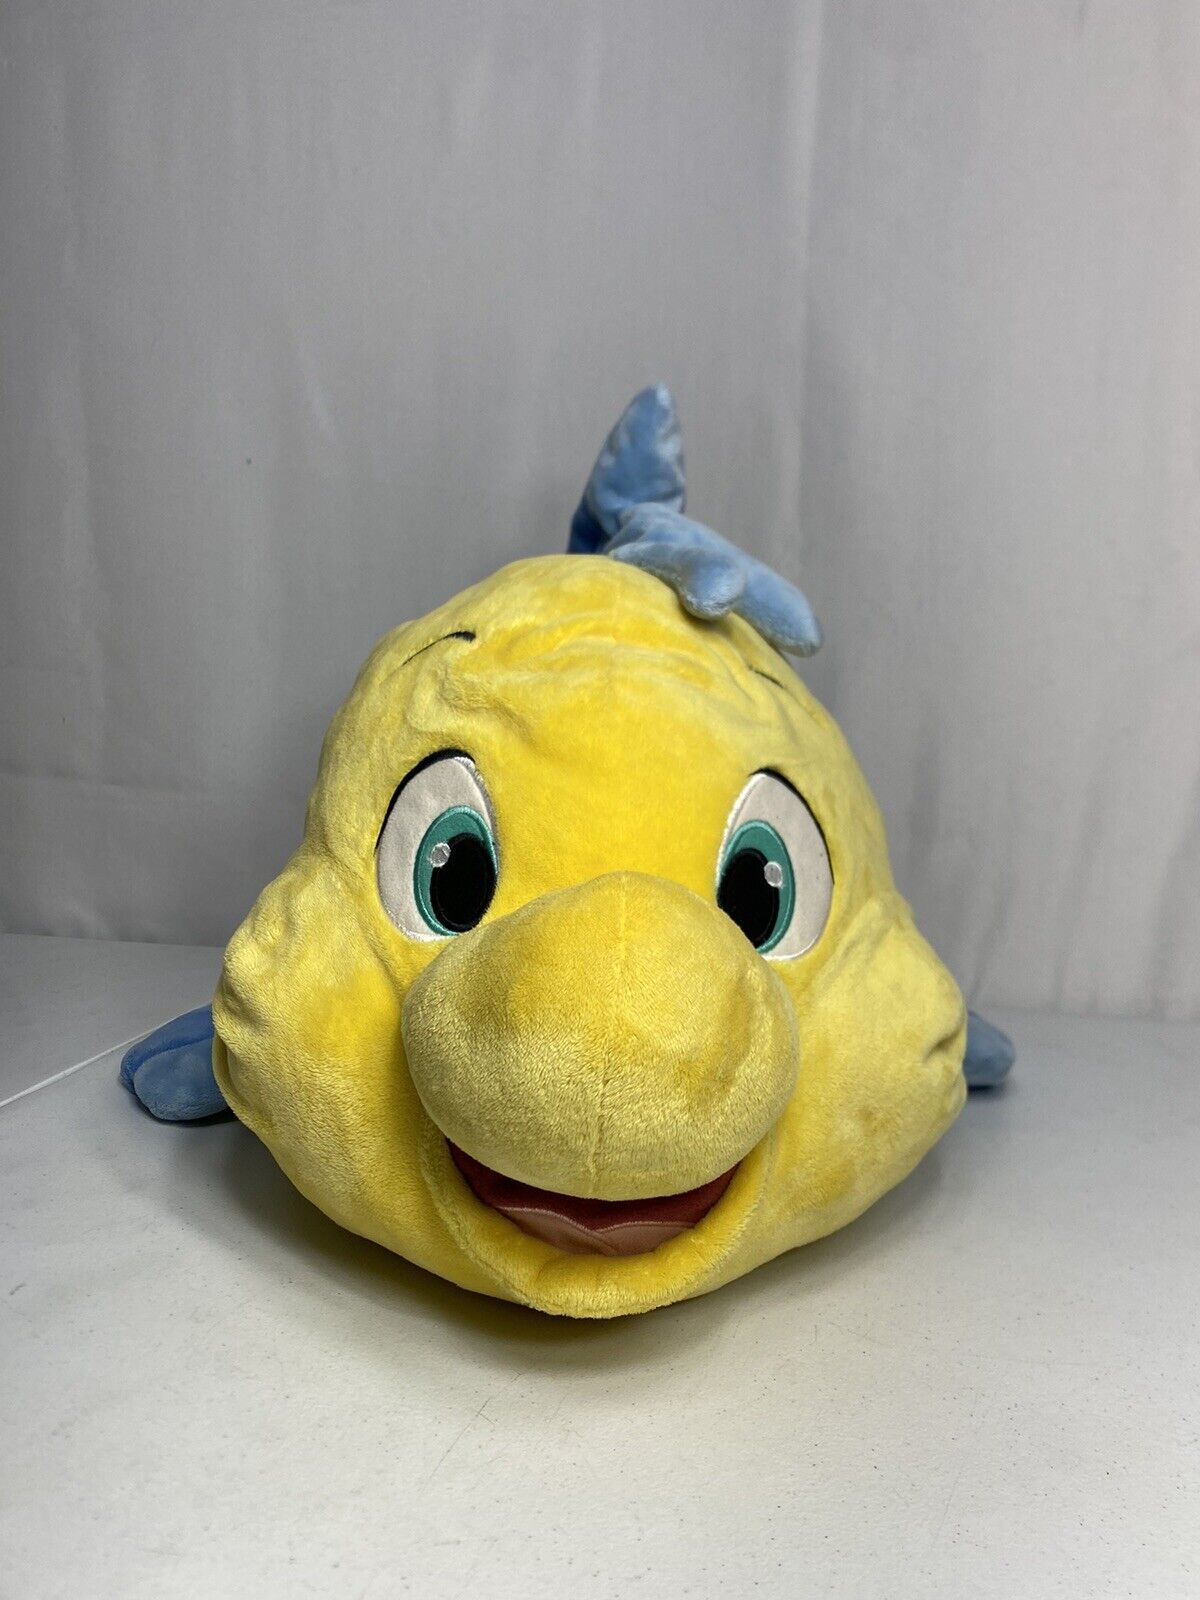 Genuine Original Authentic Large 24” Disney Mermaid Flounder Stuffed Plush Toy